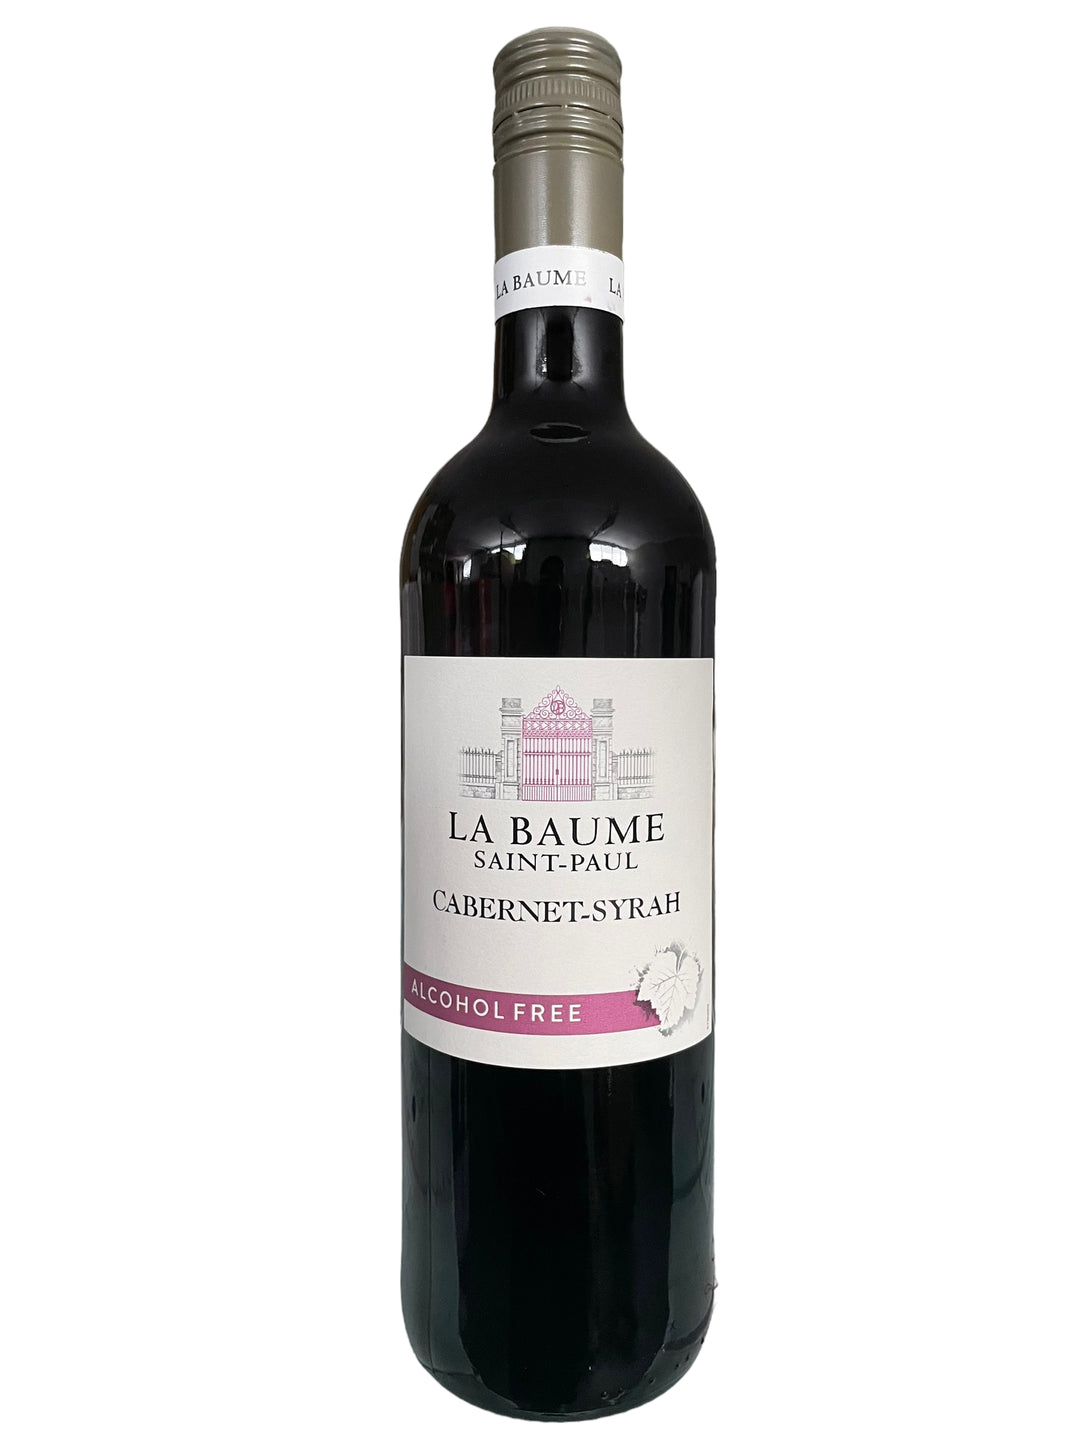 Crveno vino LA BAUME CABERNET-SYRAH alcohol free 0,75l